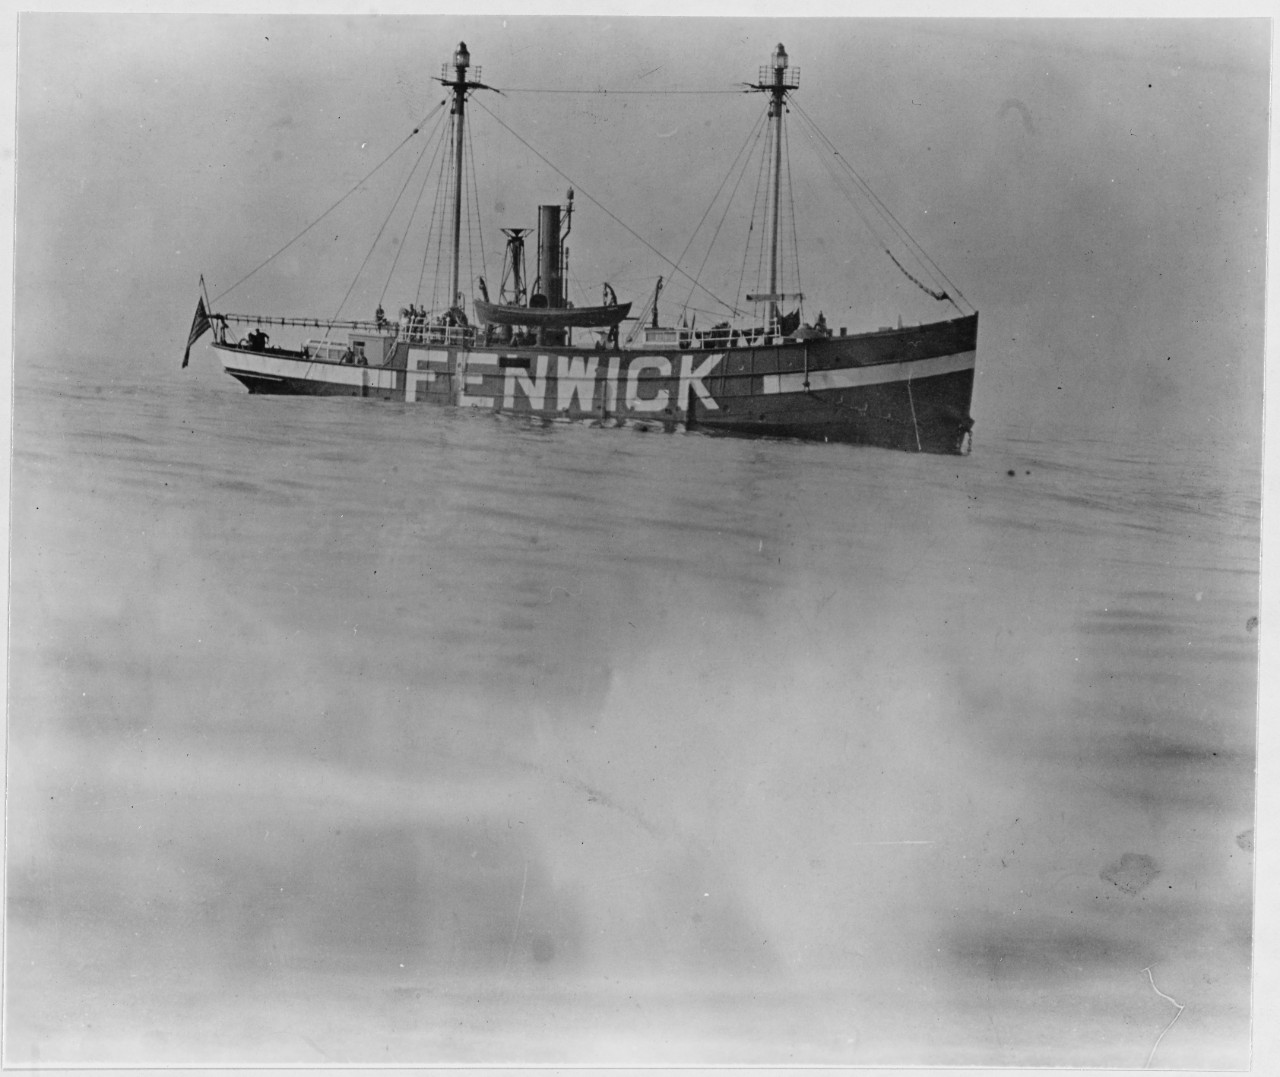 FENWICK Island lightship of United States Coast Guard